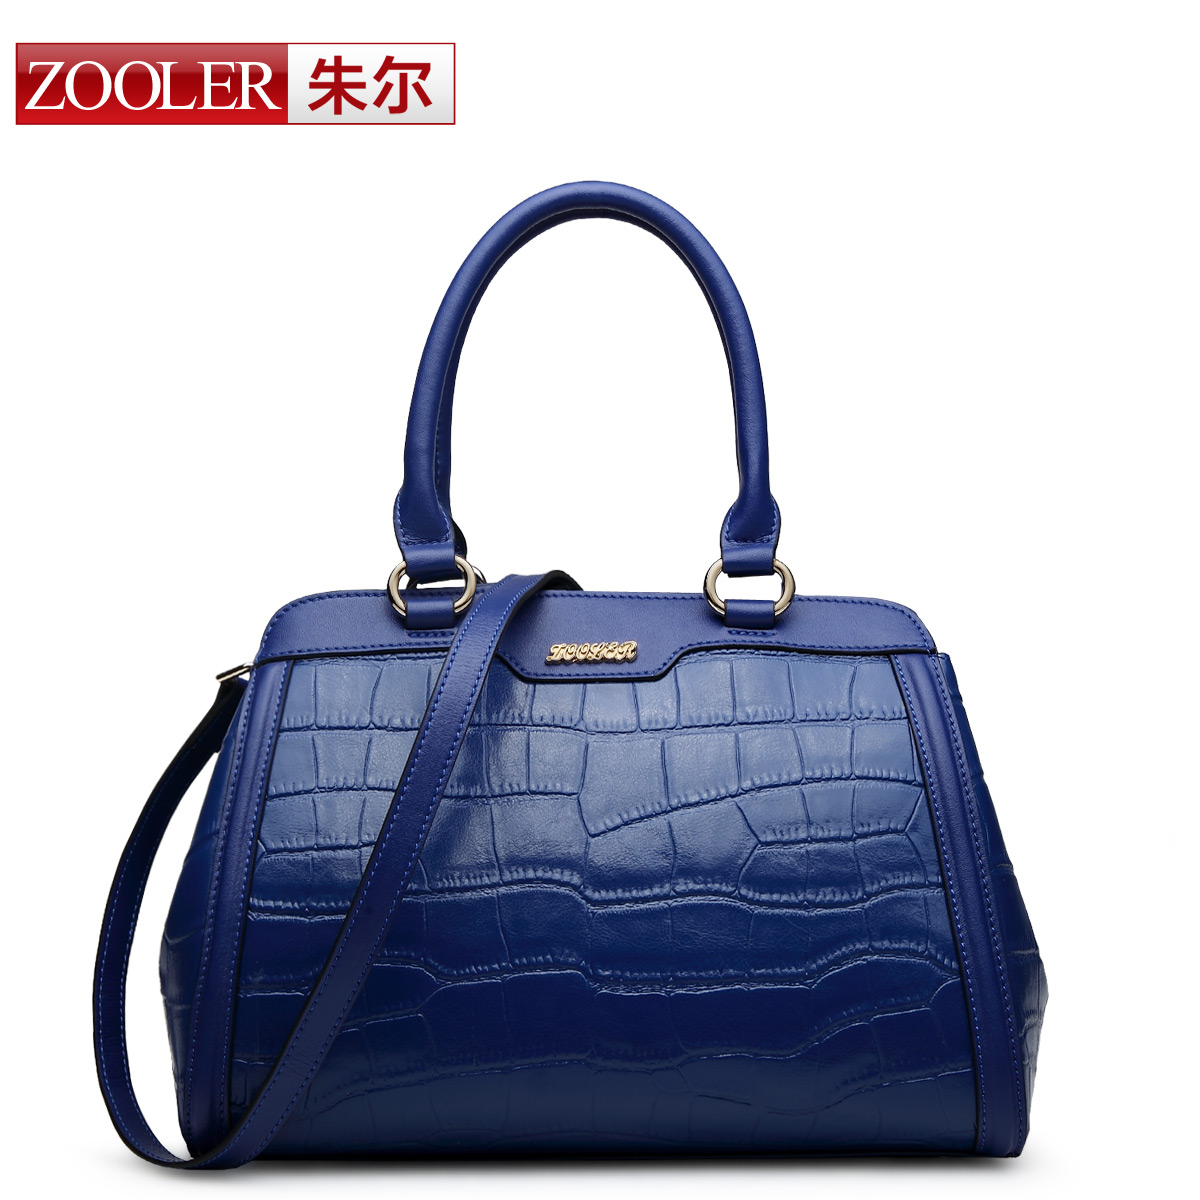 For Crocodile bags cowhide handbag genuine leather 2015 autumn and winter women's crossbody bag